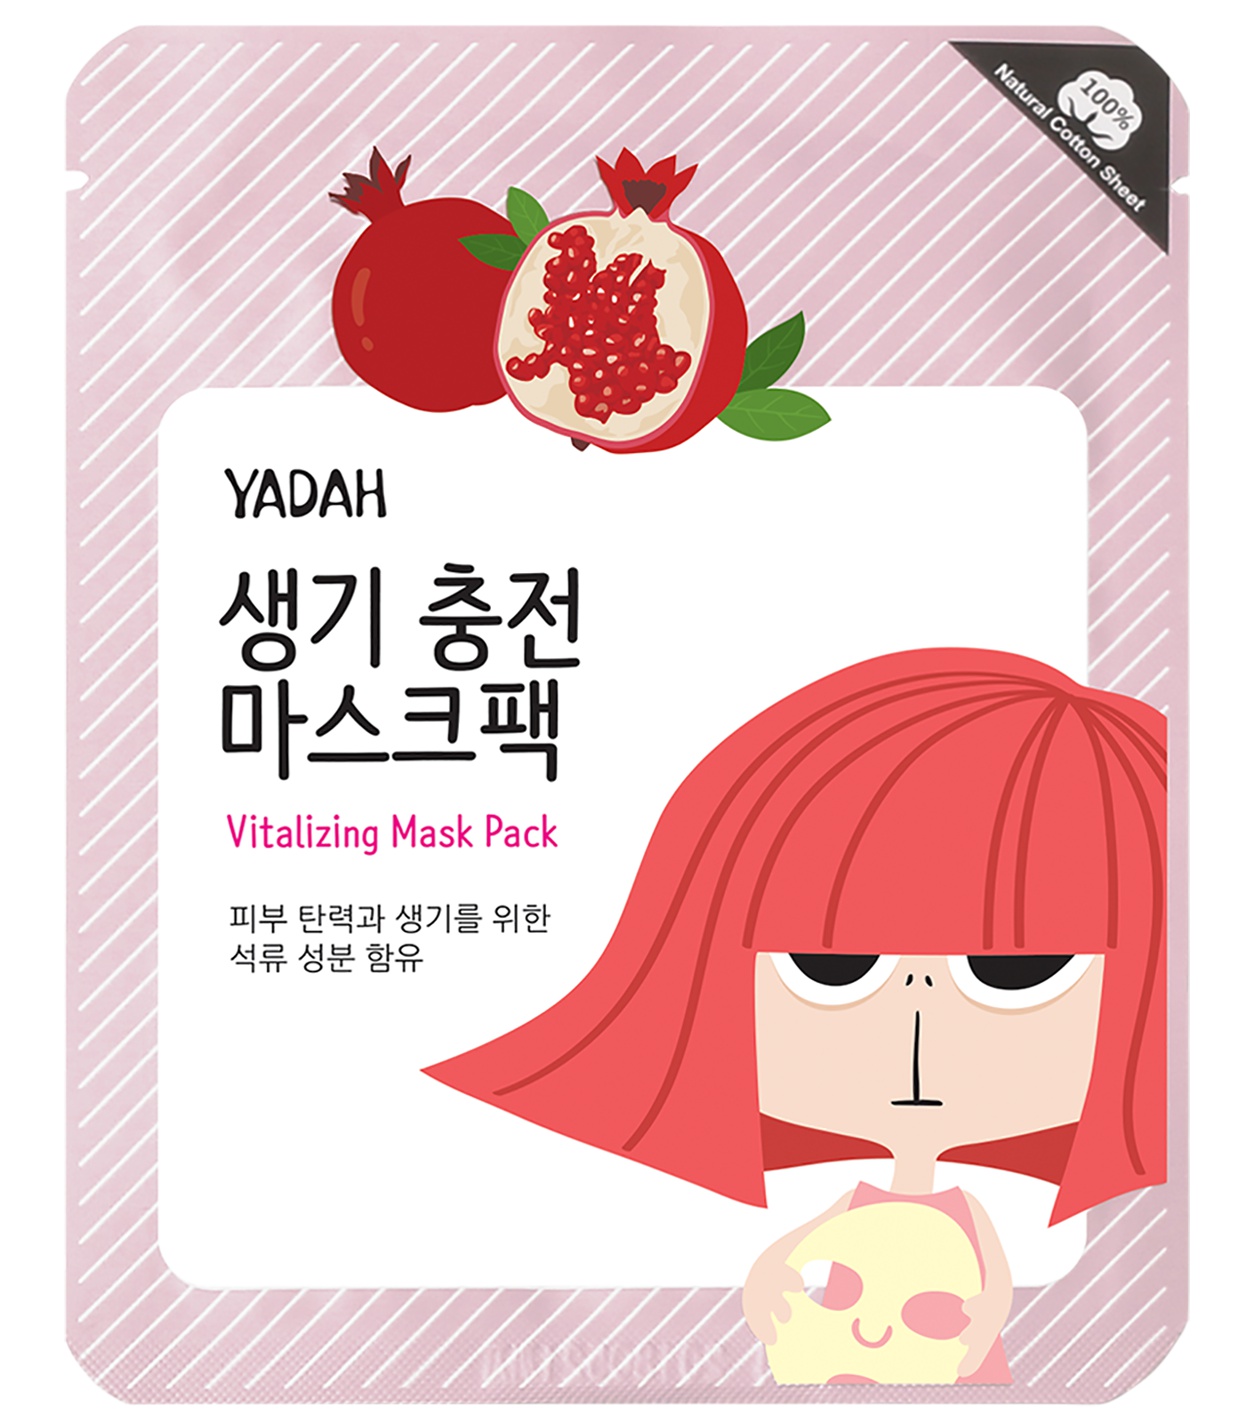 Yadah Vitalizing Mask Pack